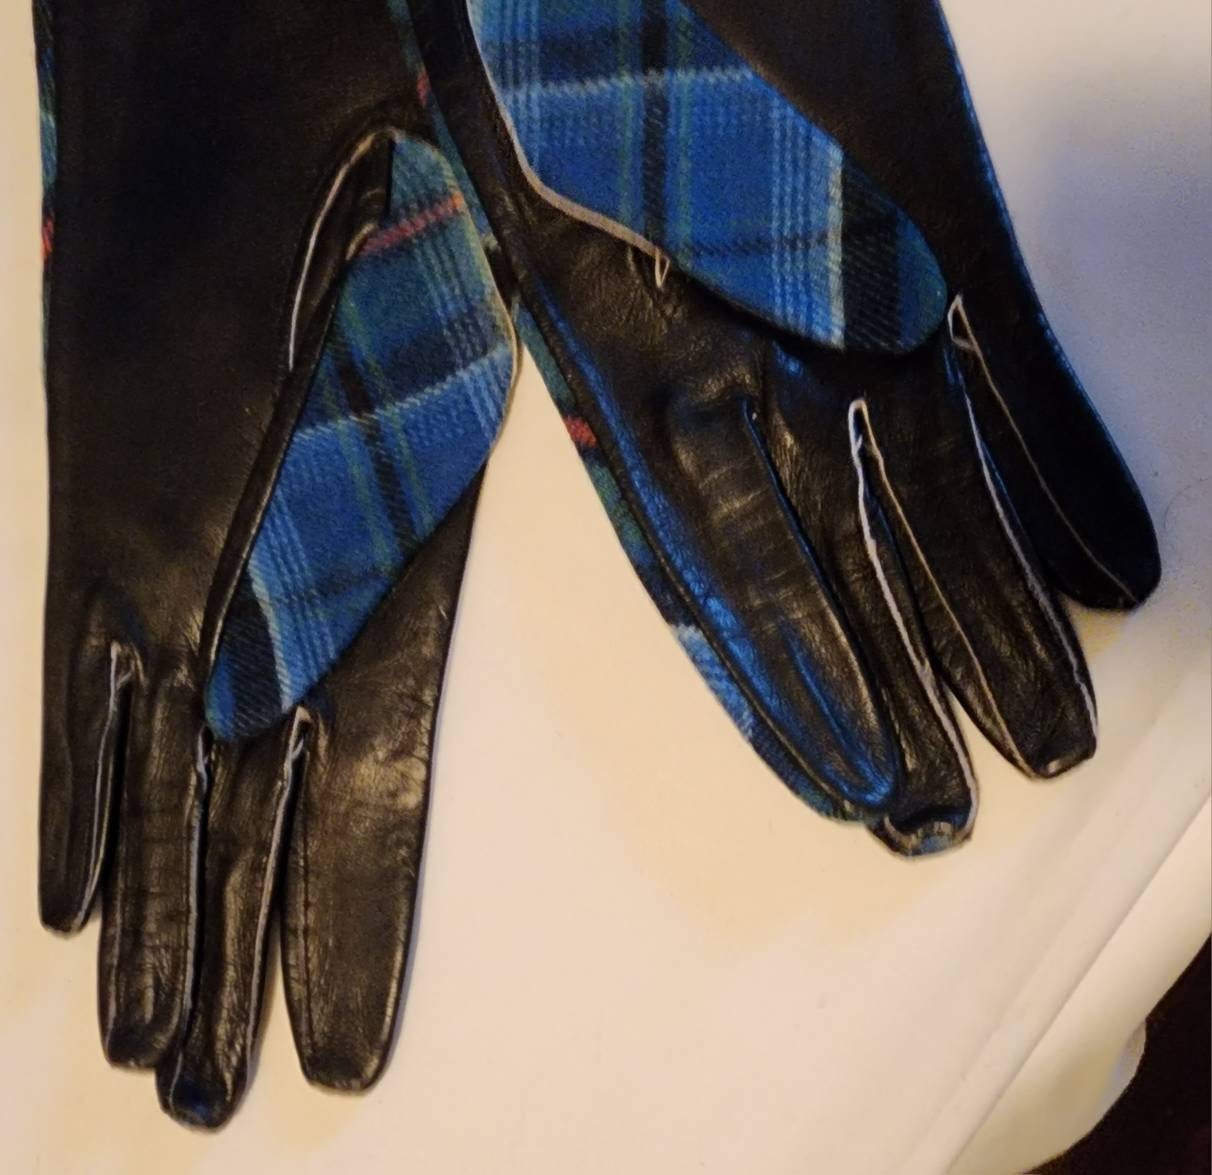 Unworn Vintage Gloves 1950s Blue Tartan Plaid Fabric Black Leather Gloves A Stuart Glove Made in England Mid Century Boho 7